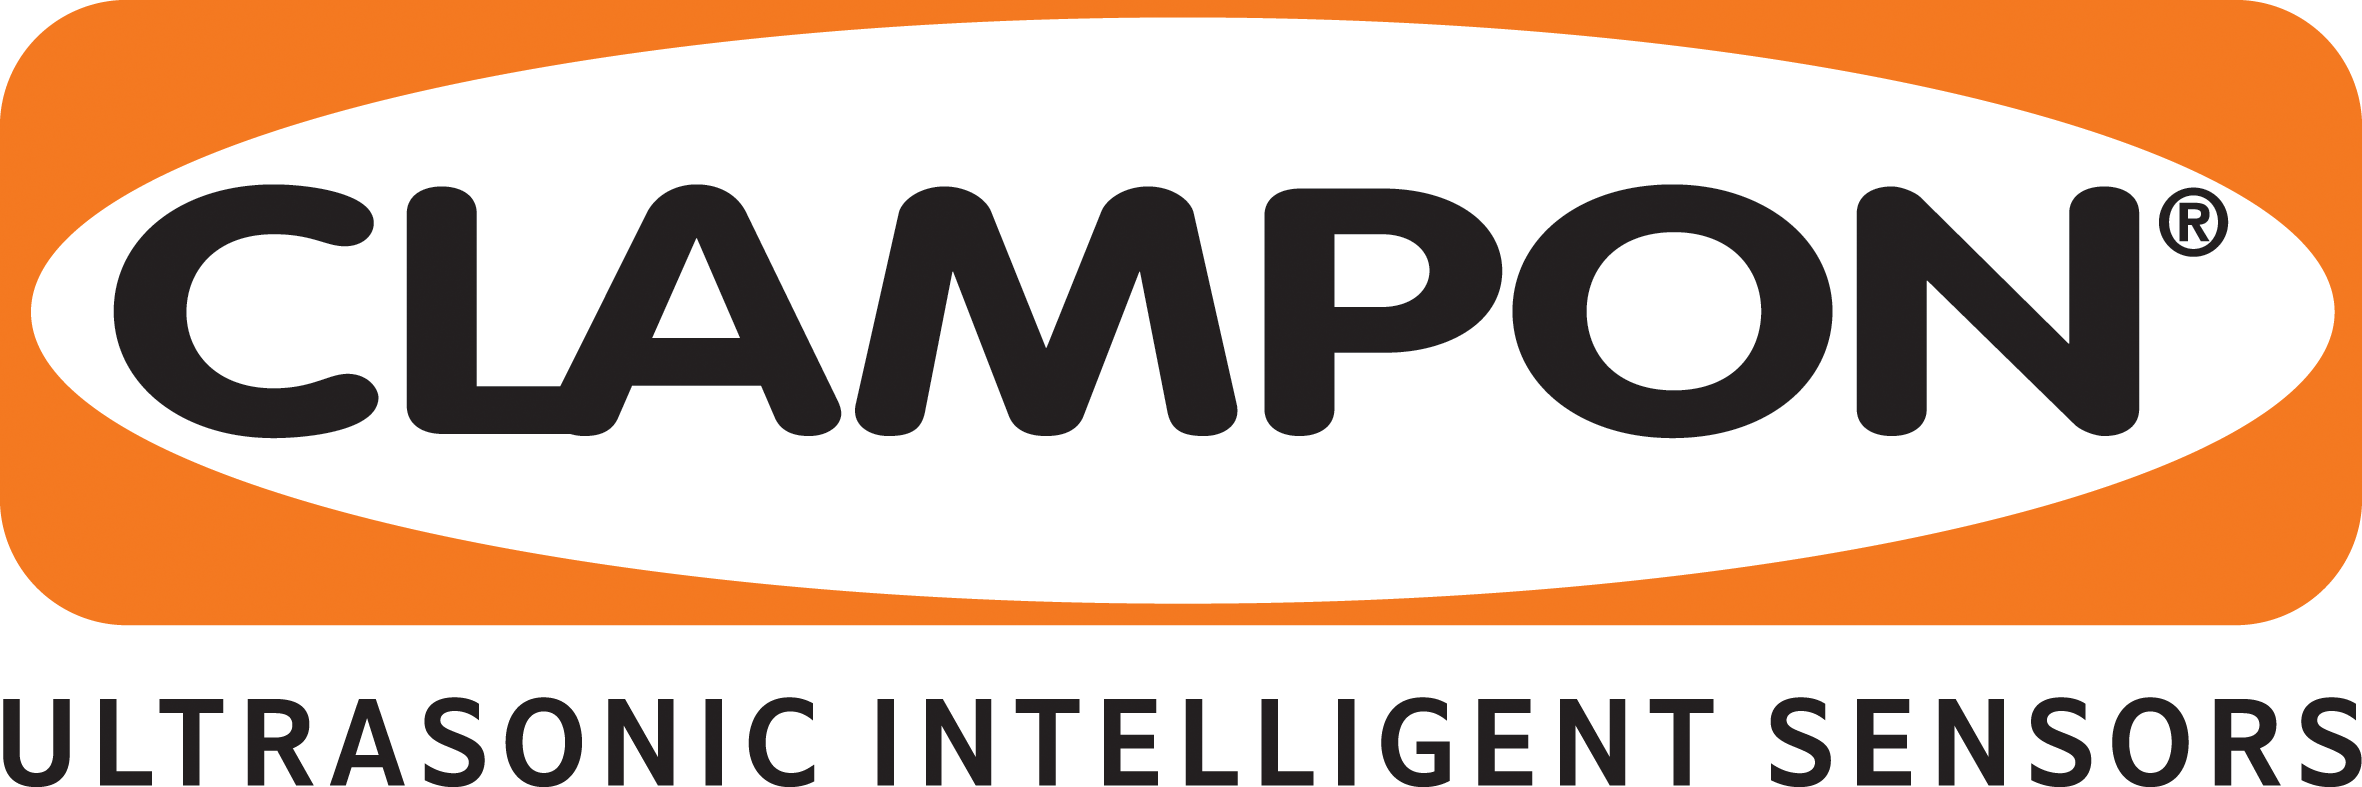 Clampon logo